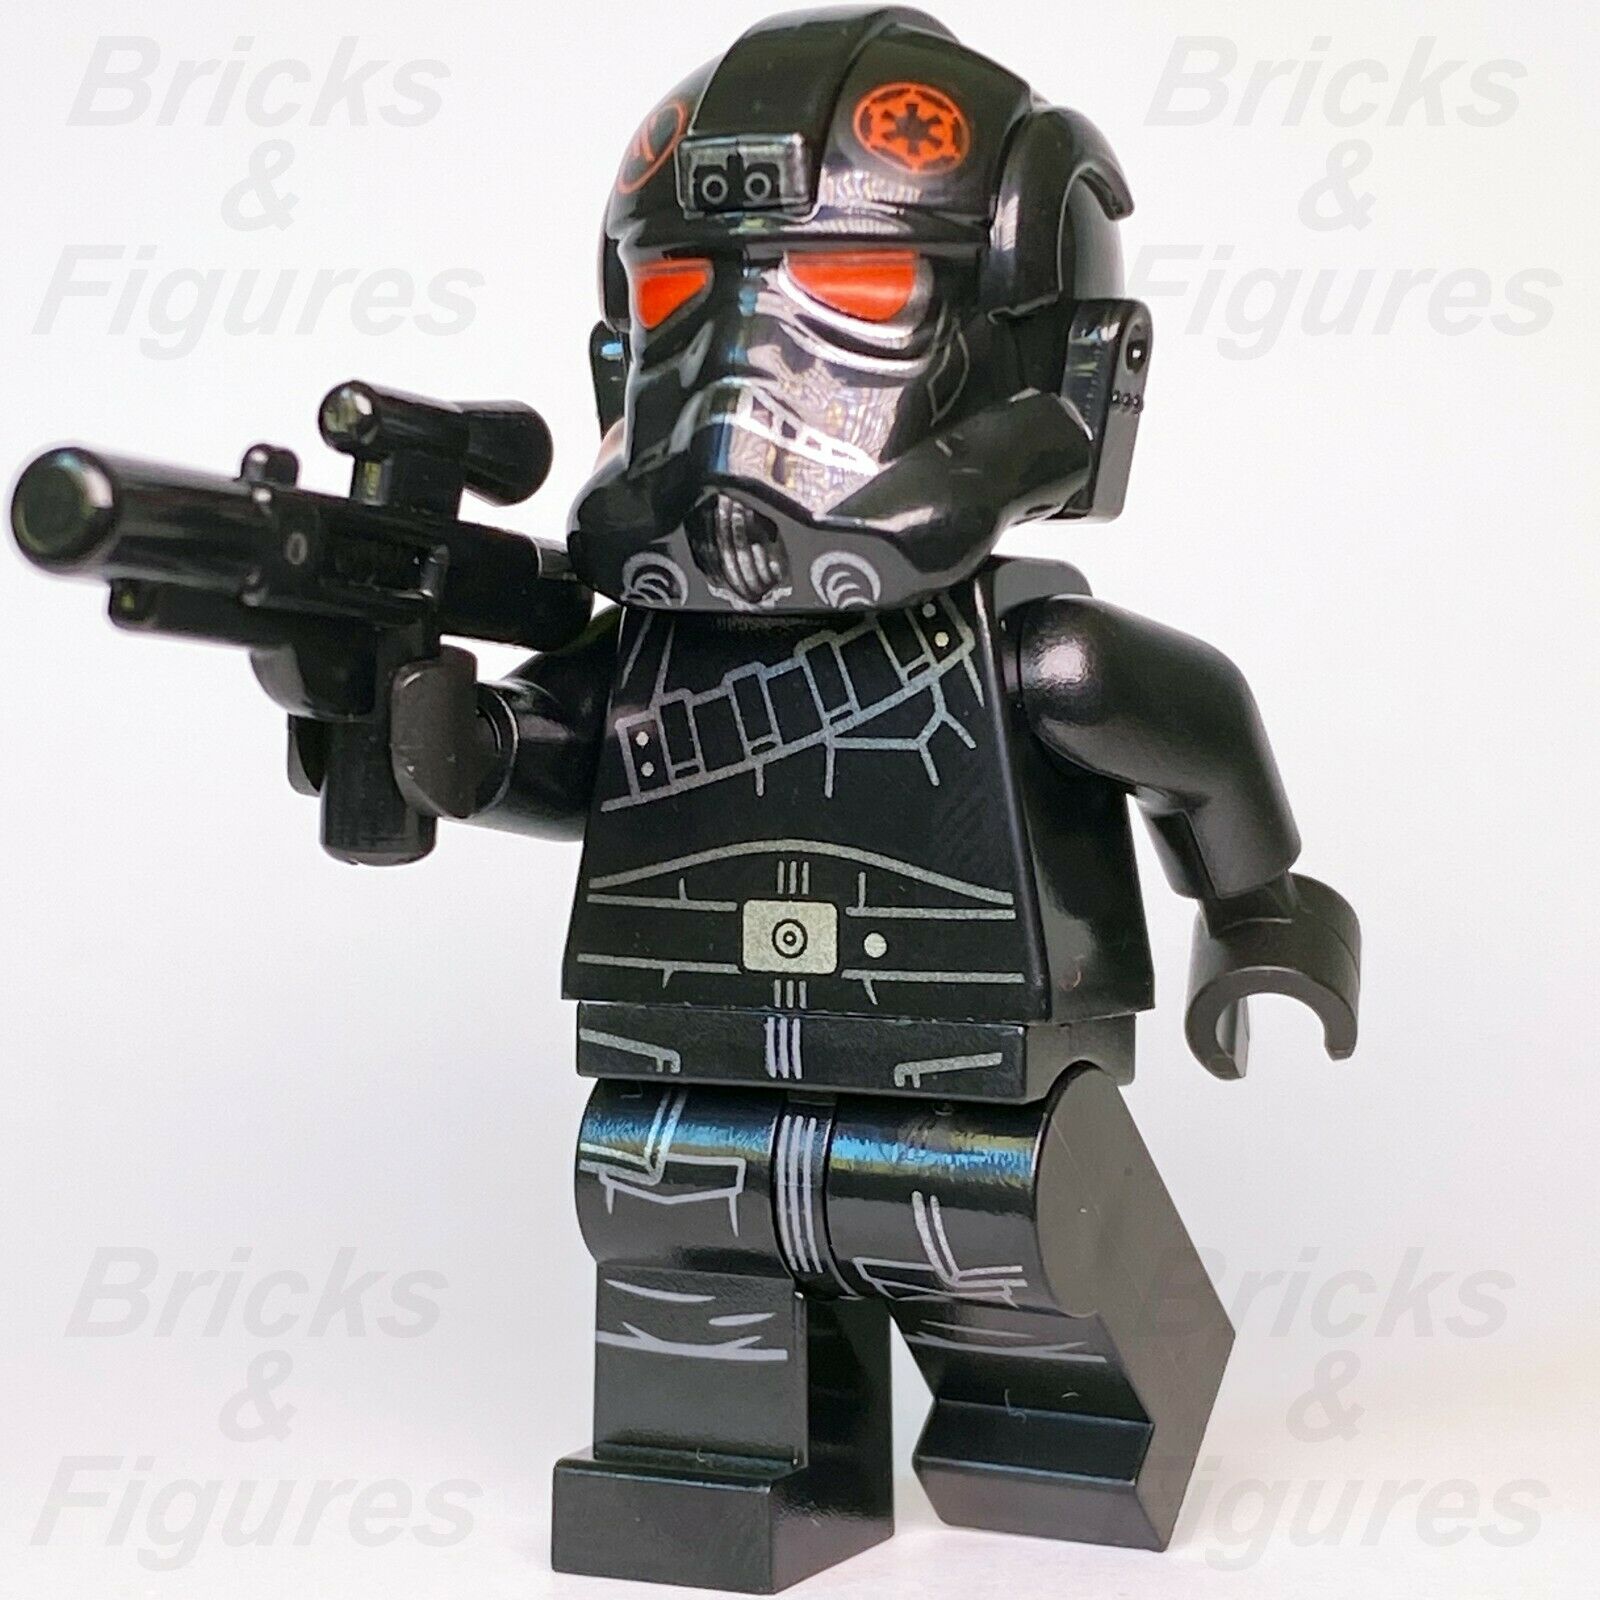 New Star Wars LEGO Elite Agent Inferno Squad Imperial Trooper Minifigure 75226 - Bricks & Figures